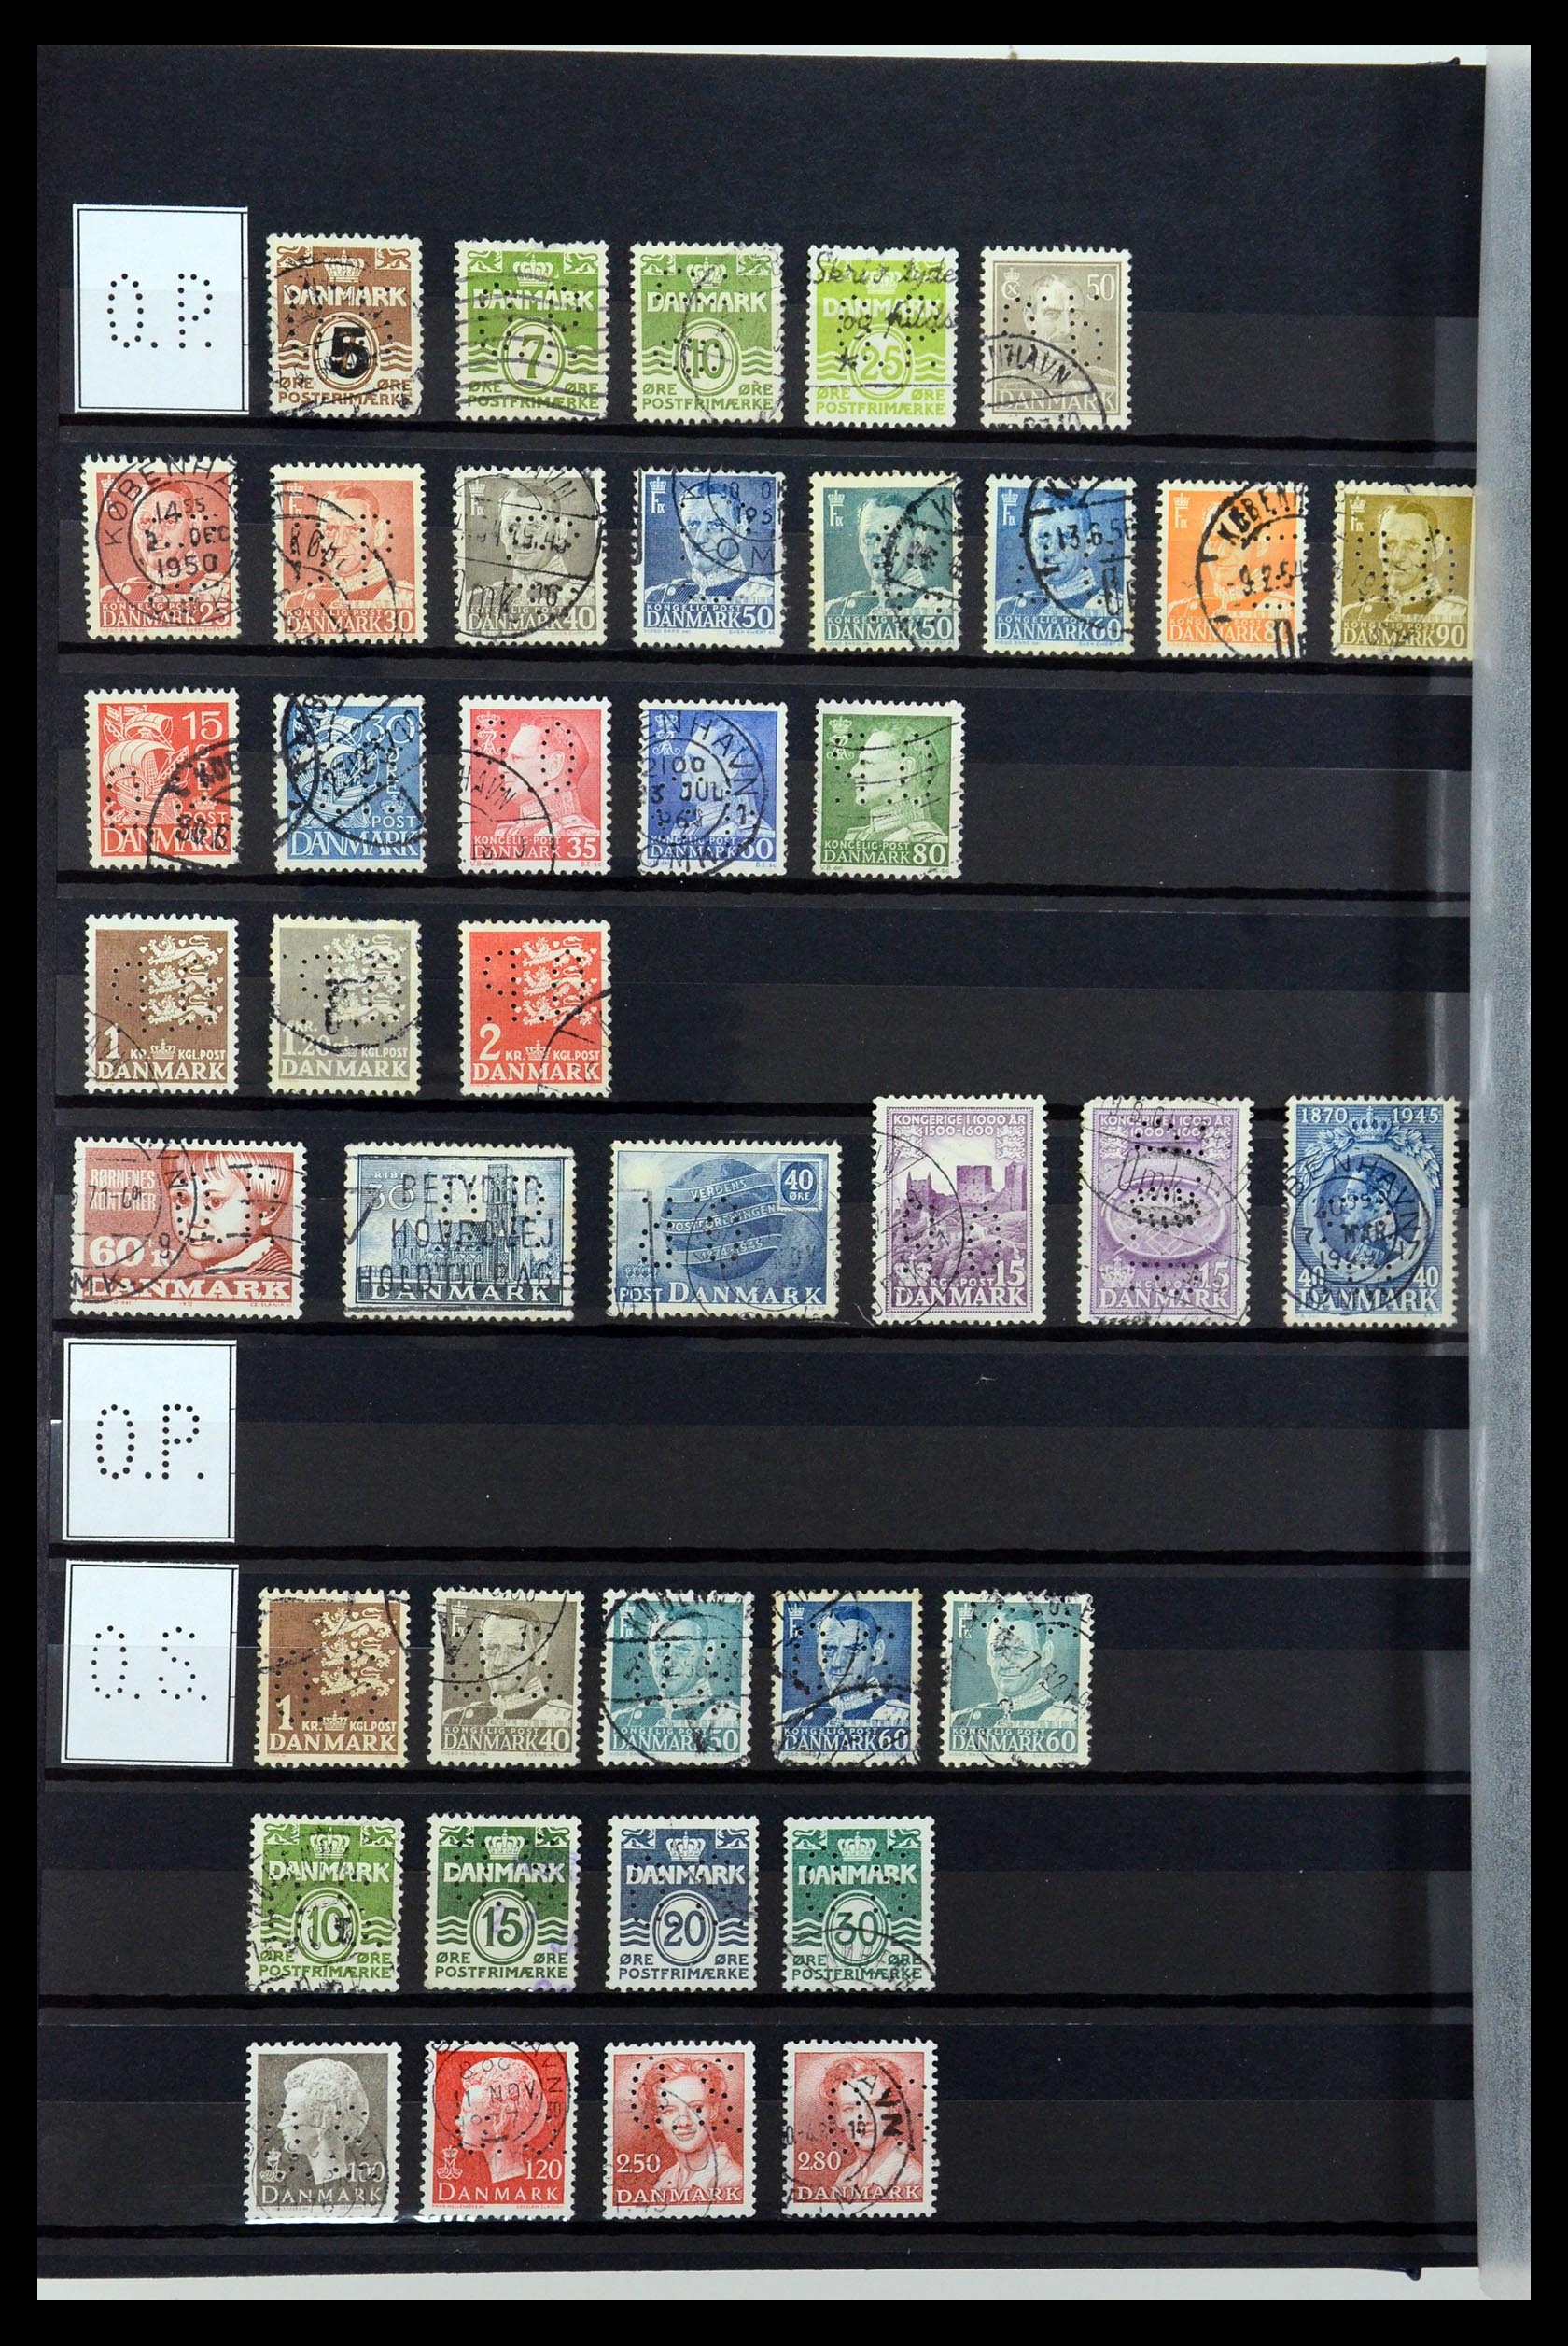 36396 187 - Stamp collection 36396 Denmark perfins.